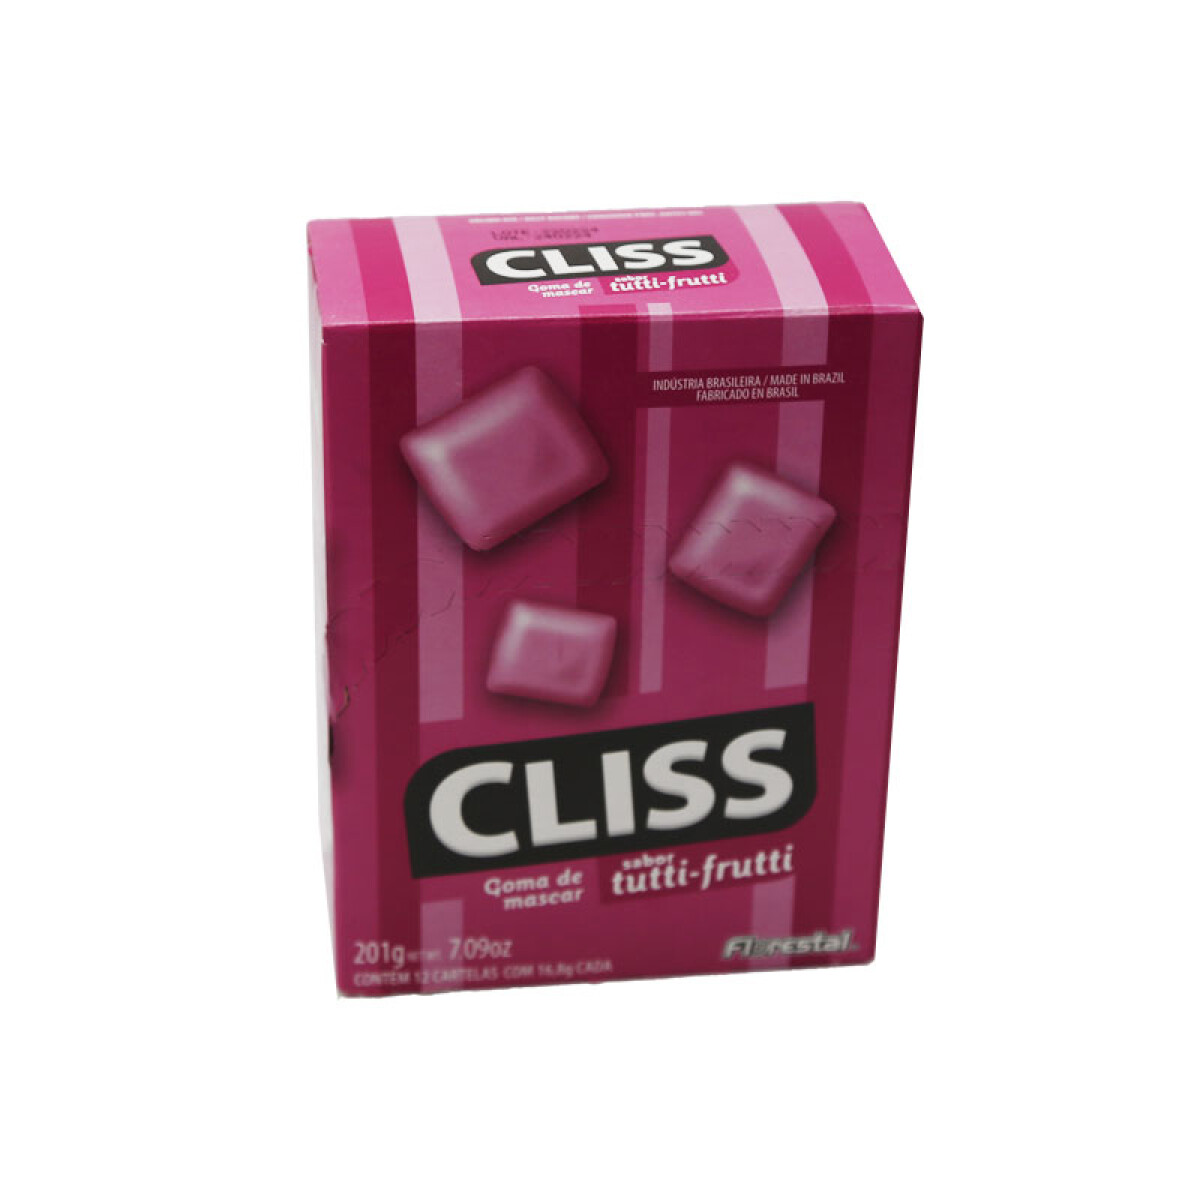 Chicle CLISS BLISTER 12pcs 201grs - Tutti Frutti 